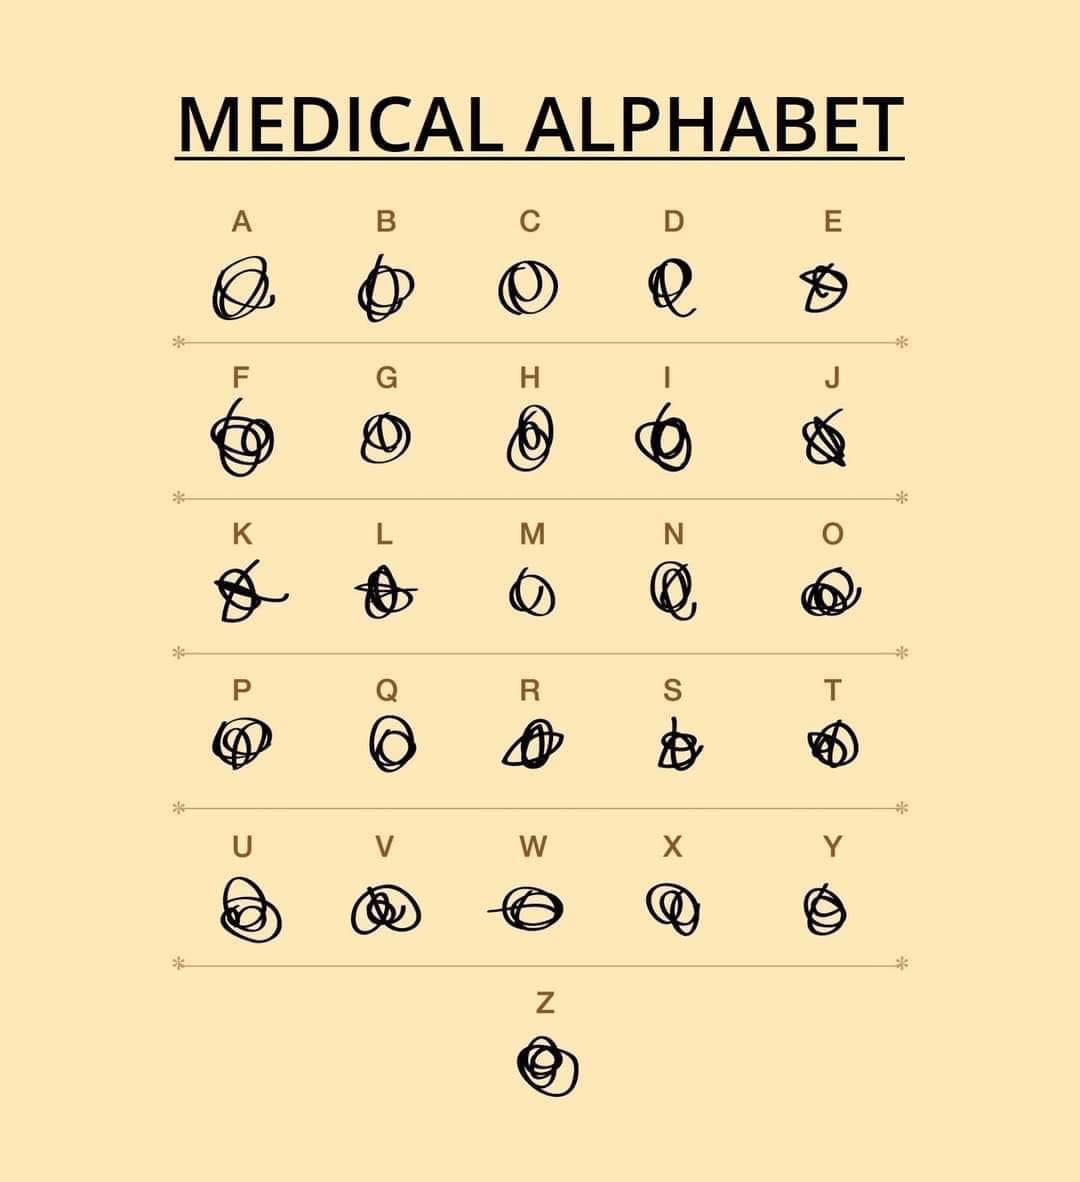 medical alphabet - Medical Alphabet A B D E e Sk H u ve K M N le R S T 510 W X Y No